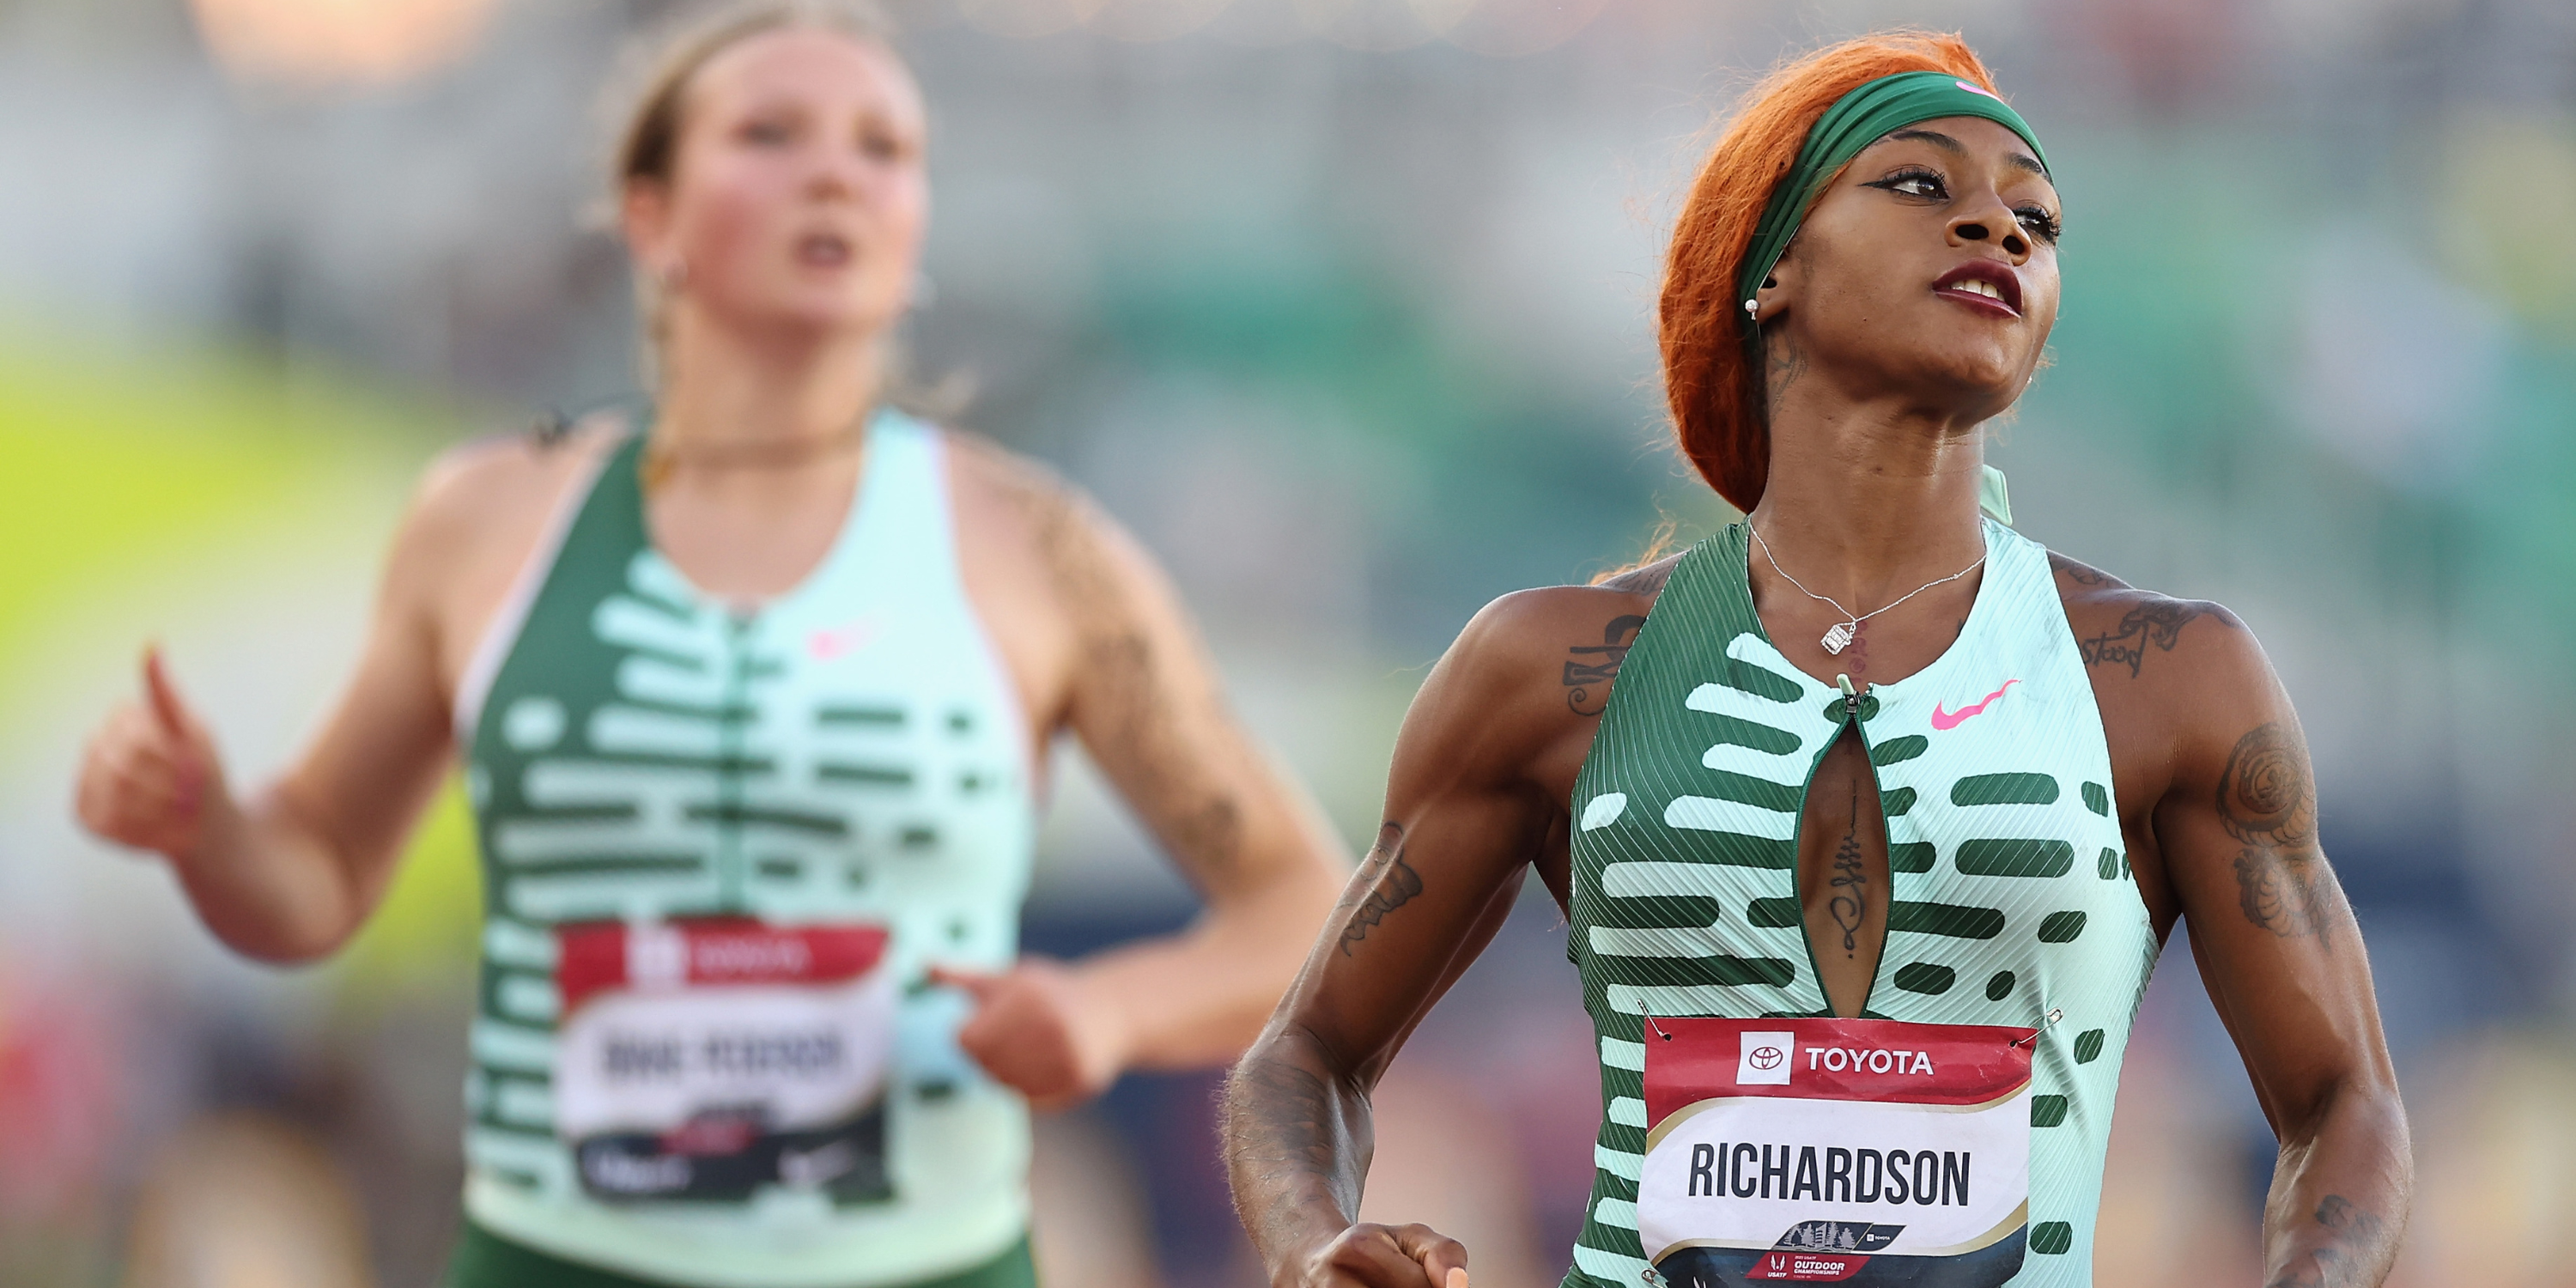 US sprinter Sha'Carri Richardson